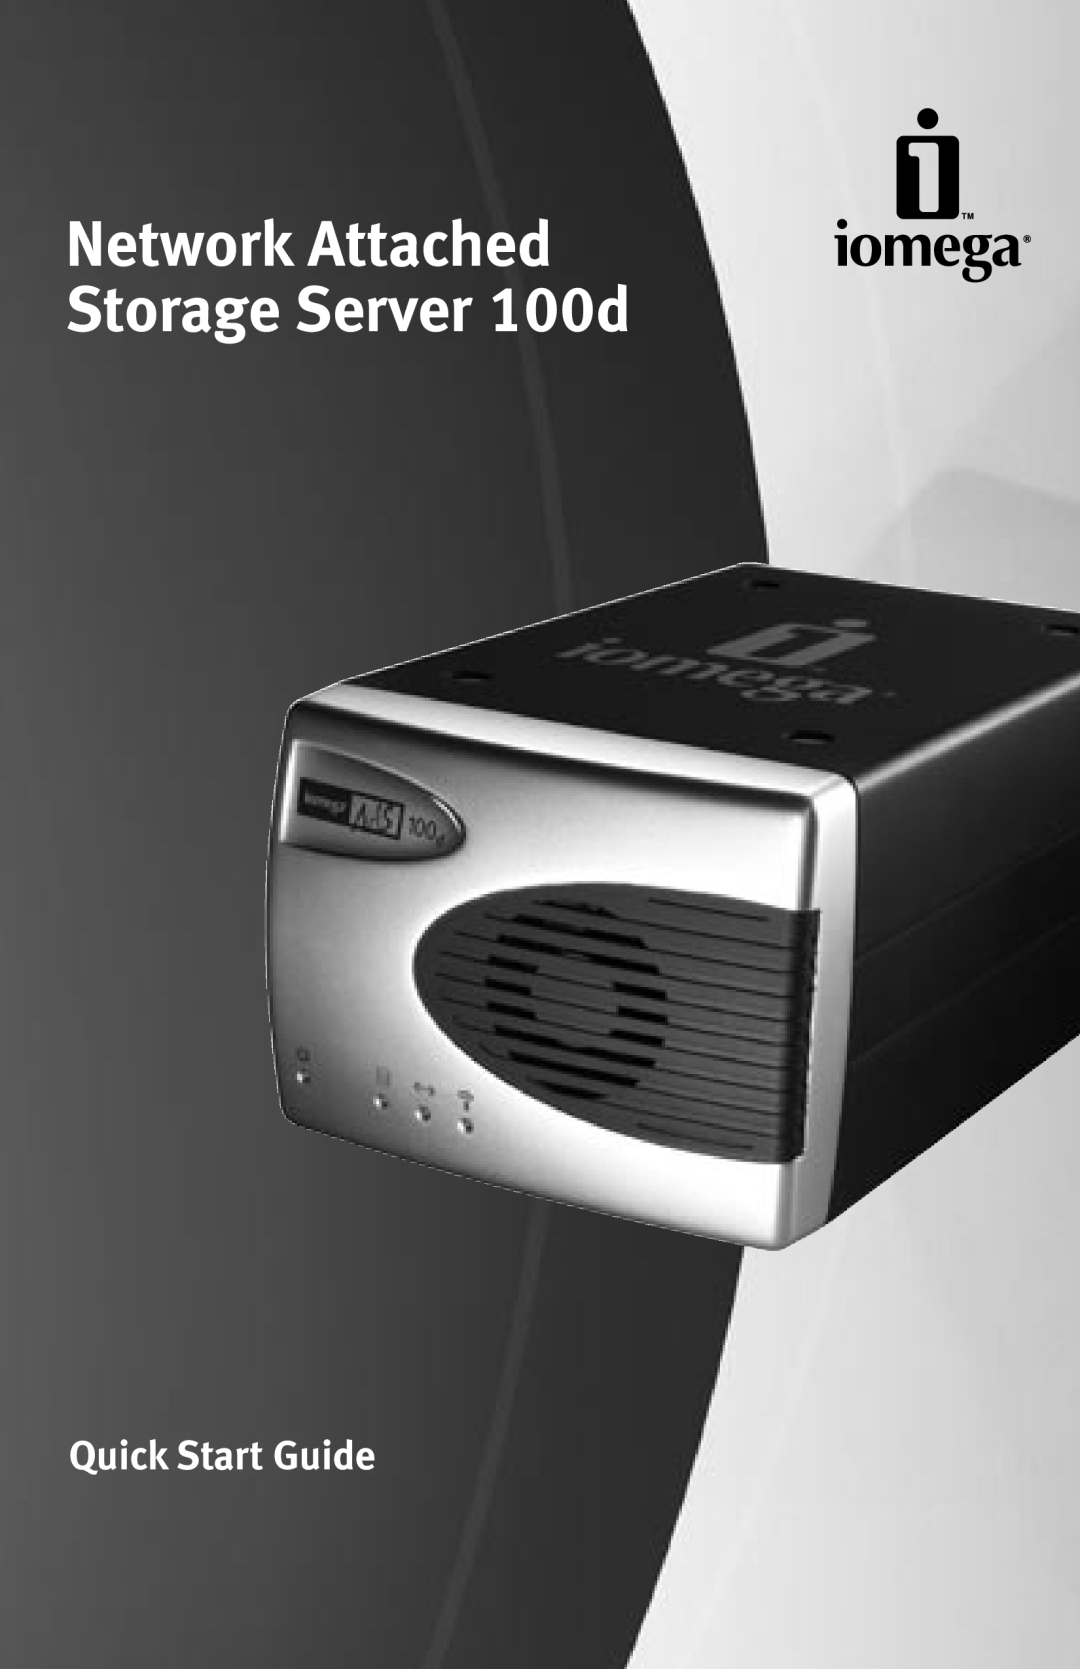 Iomega 100D quick start Network Attached Storage Server 100d, Quick Start Guide 